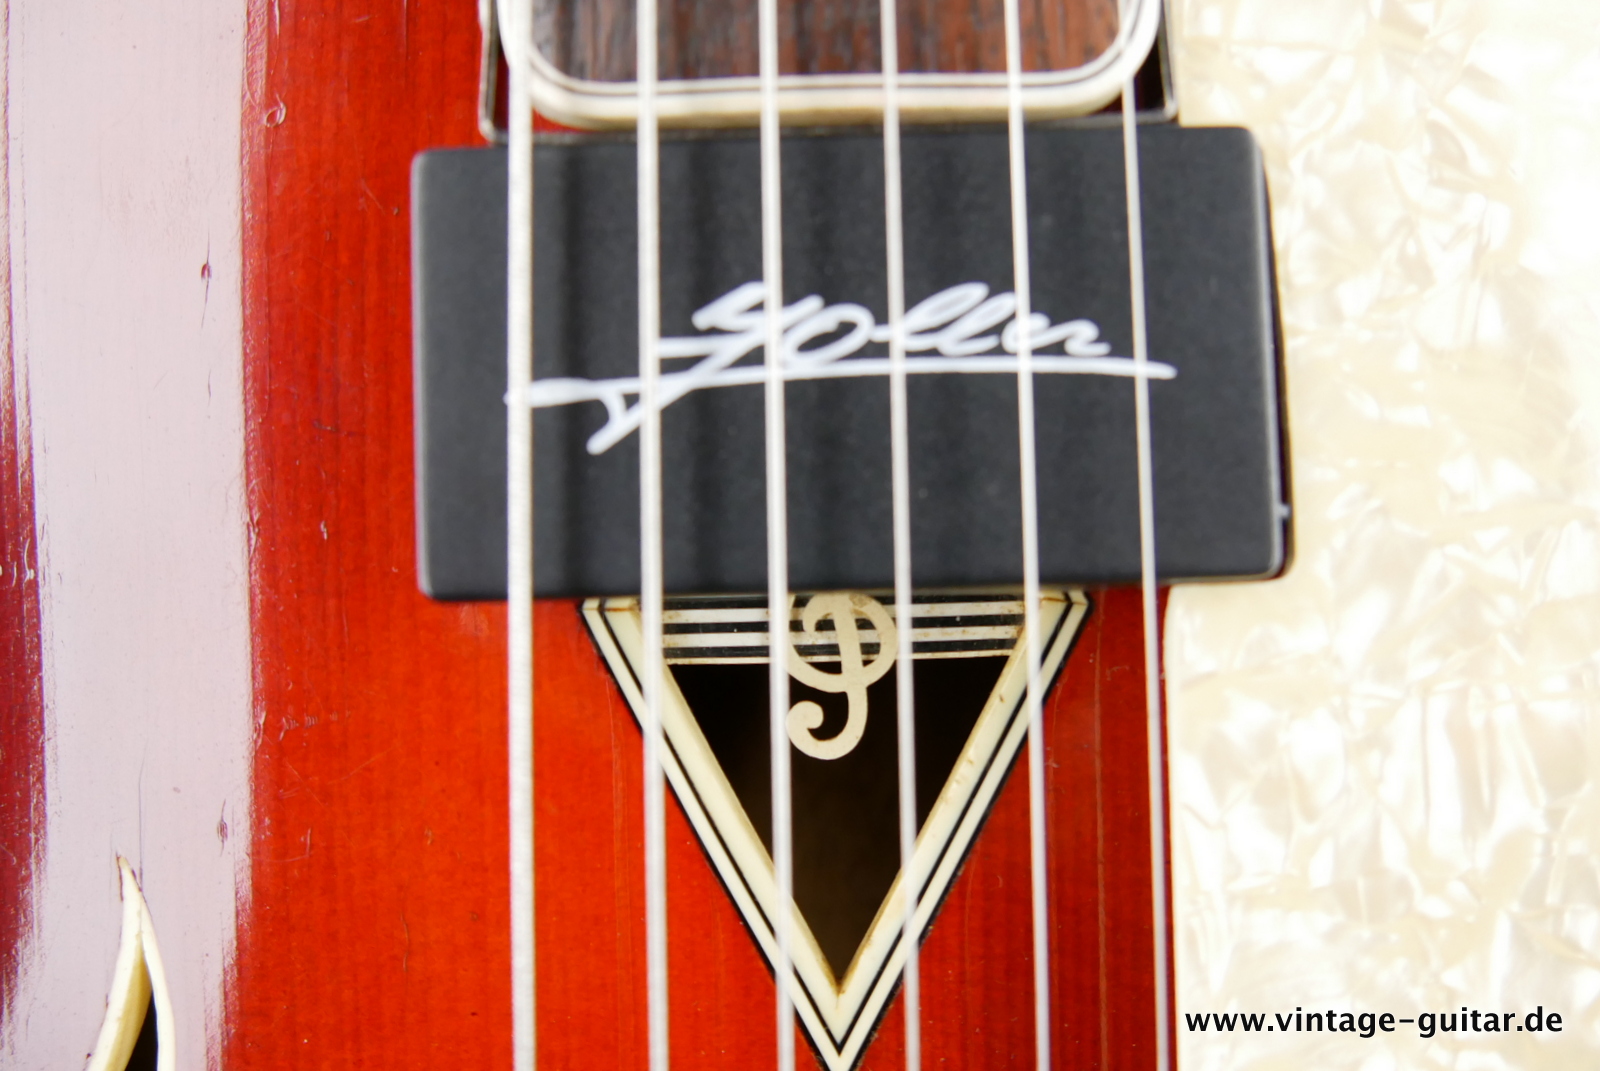 Hofner_hoefner_464S_germany_archtop_red_redburst_gypsy_guitar_pickup_1960s_60s-013.JPG